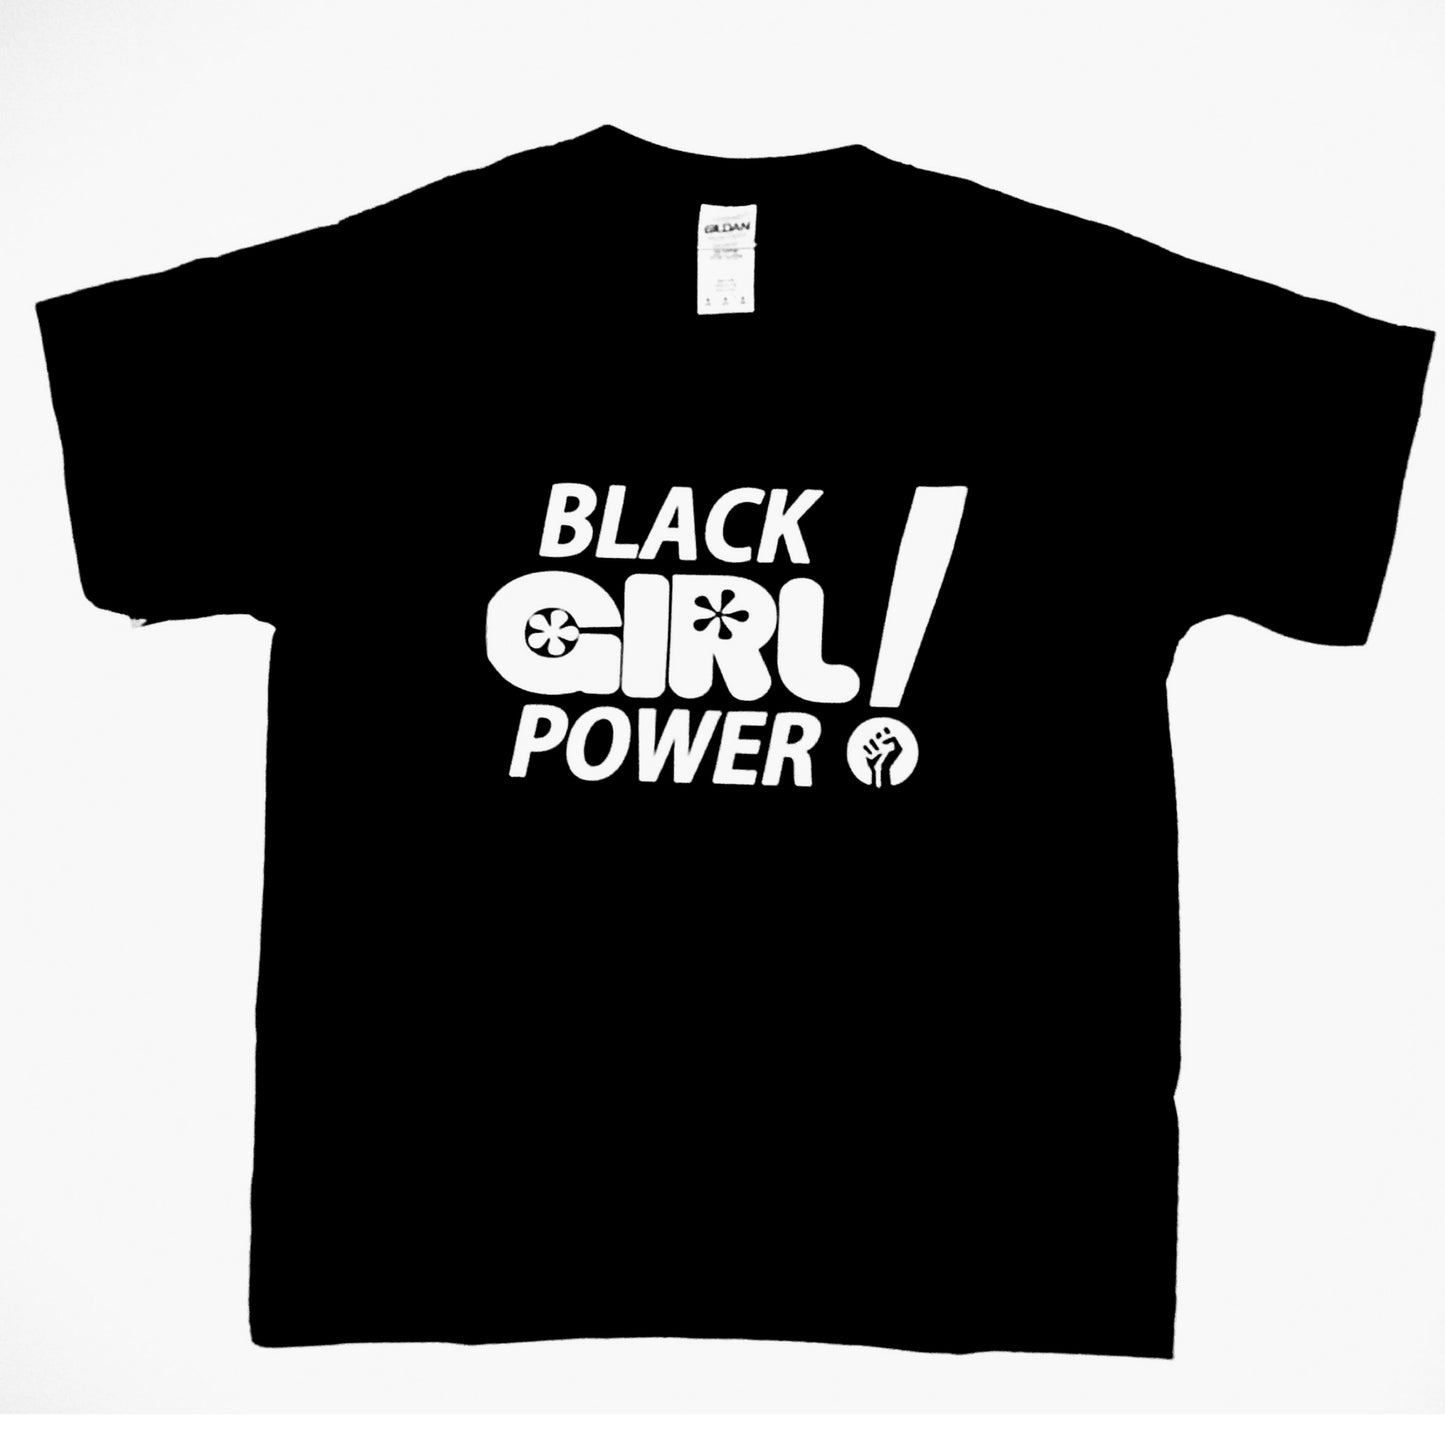 Black Girl Power! (Youth)